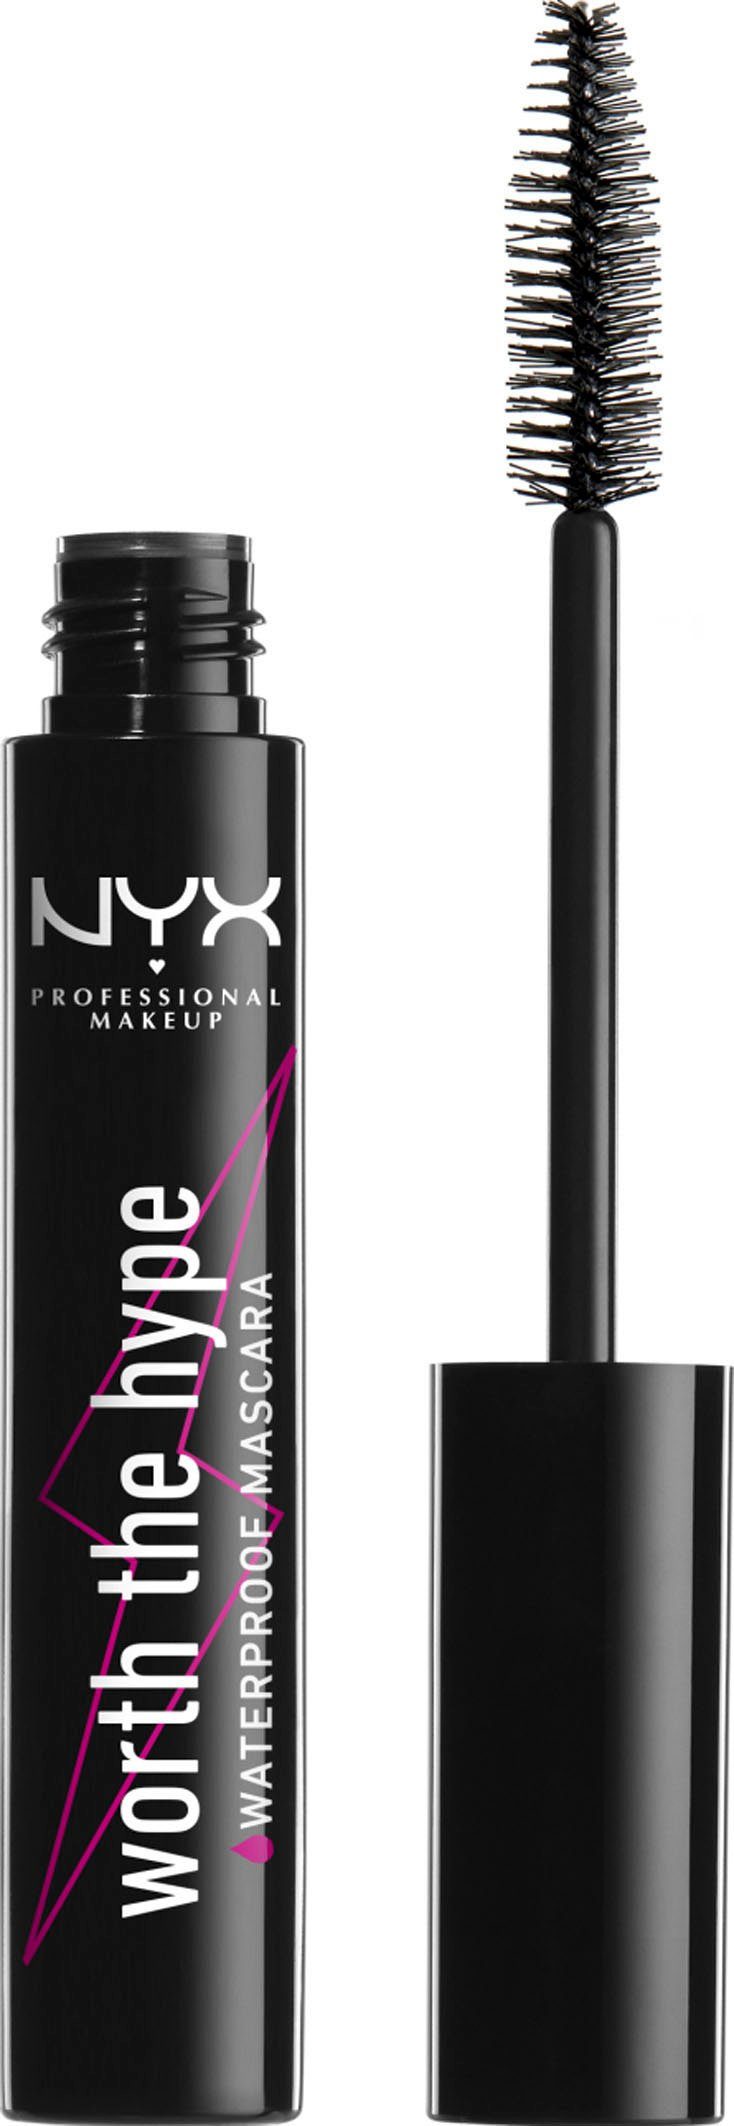 [Beliebter Artikel! ] NYX Mascara Professional Makeup Waterproof Hype The Mascara Worth